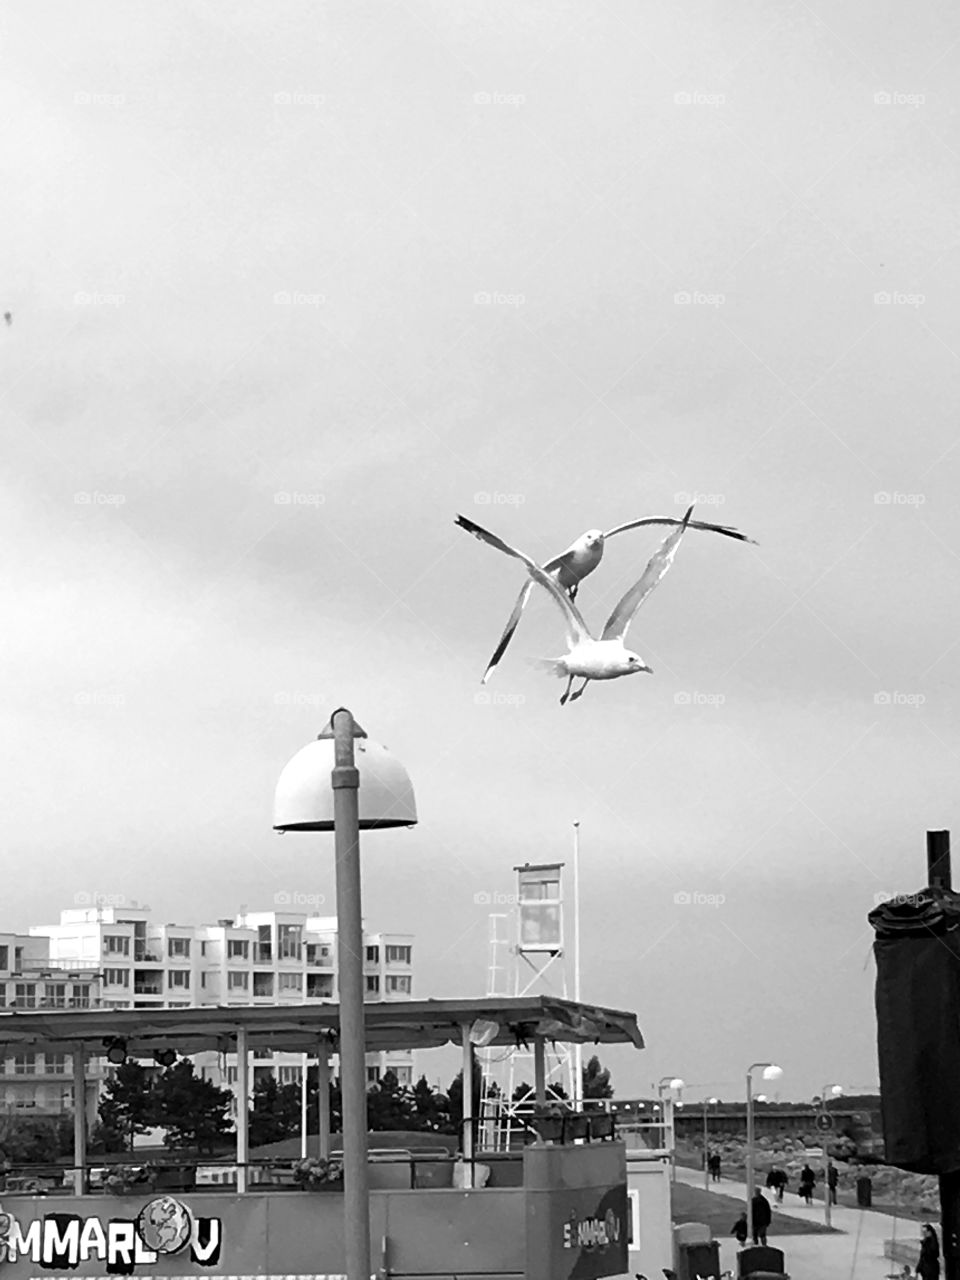 Seagulls leaving the lamp 